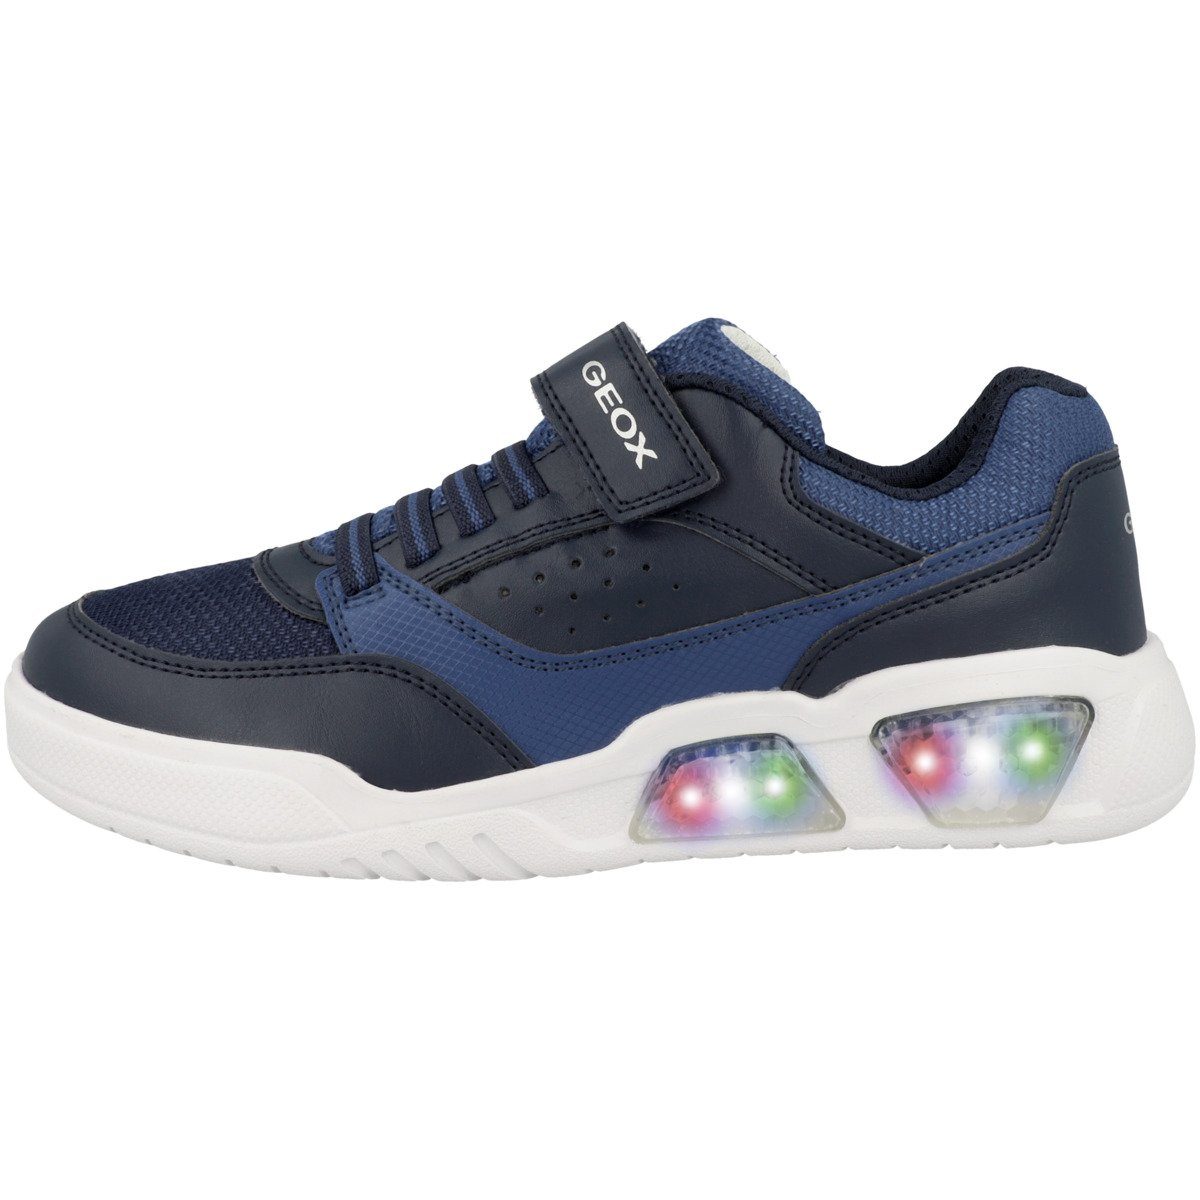 Funktion dunkelblau Sneaker B. J LED B Illuminus Geox Jungen